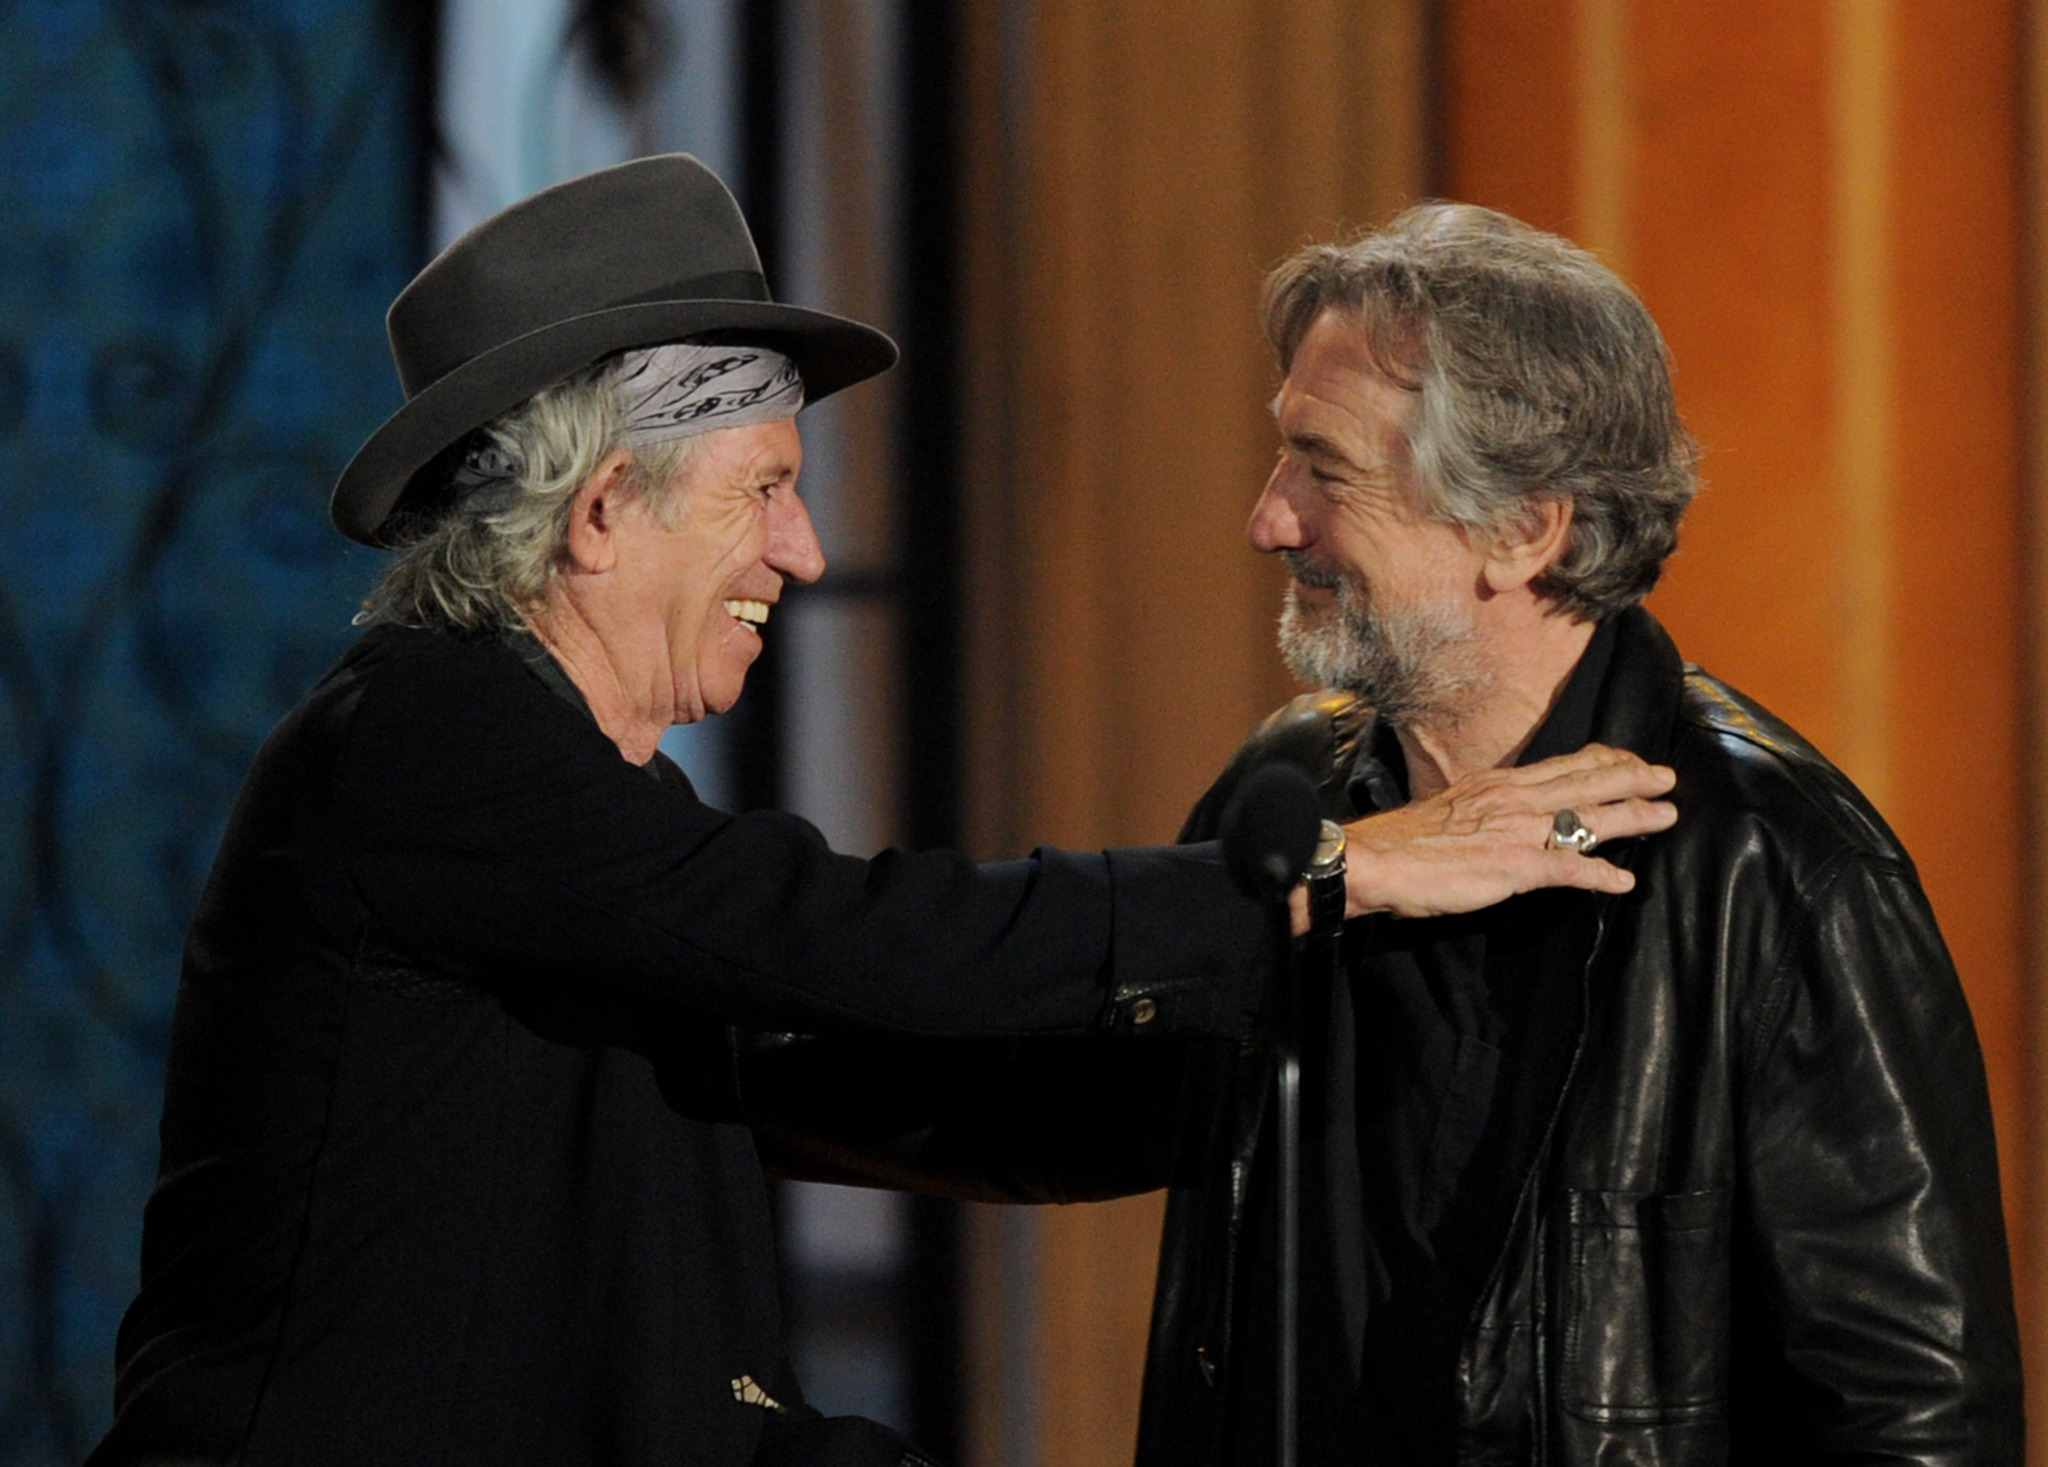 Robert De Niro and Keith Richards